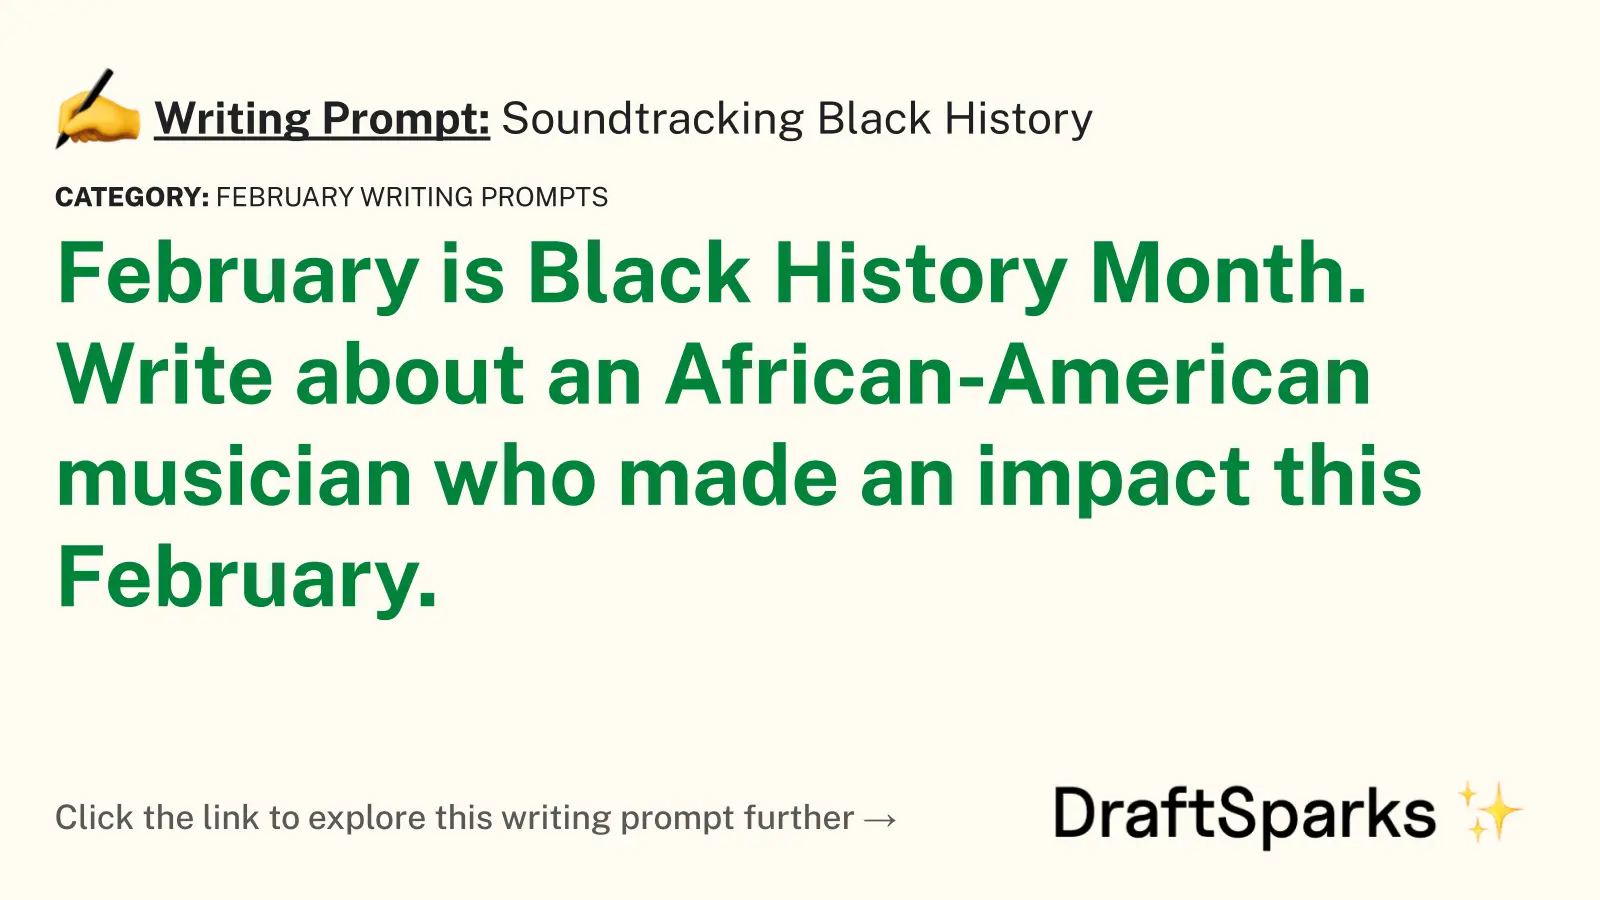 Soundtracking Black History